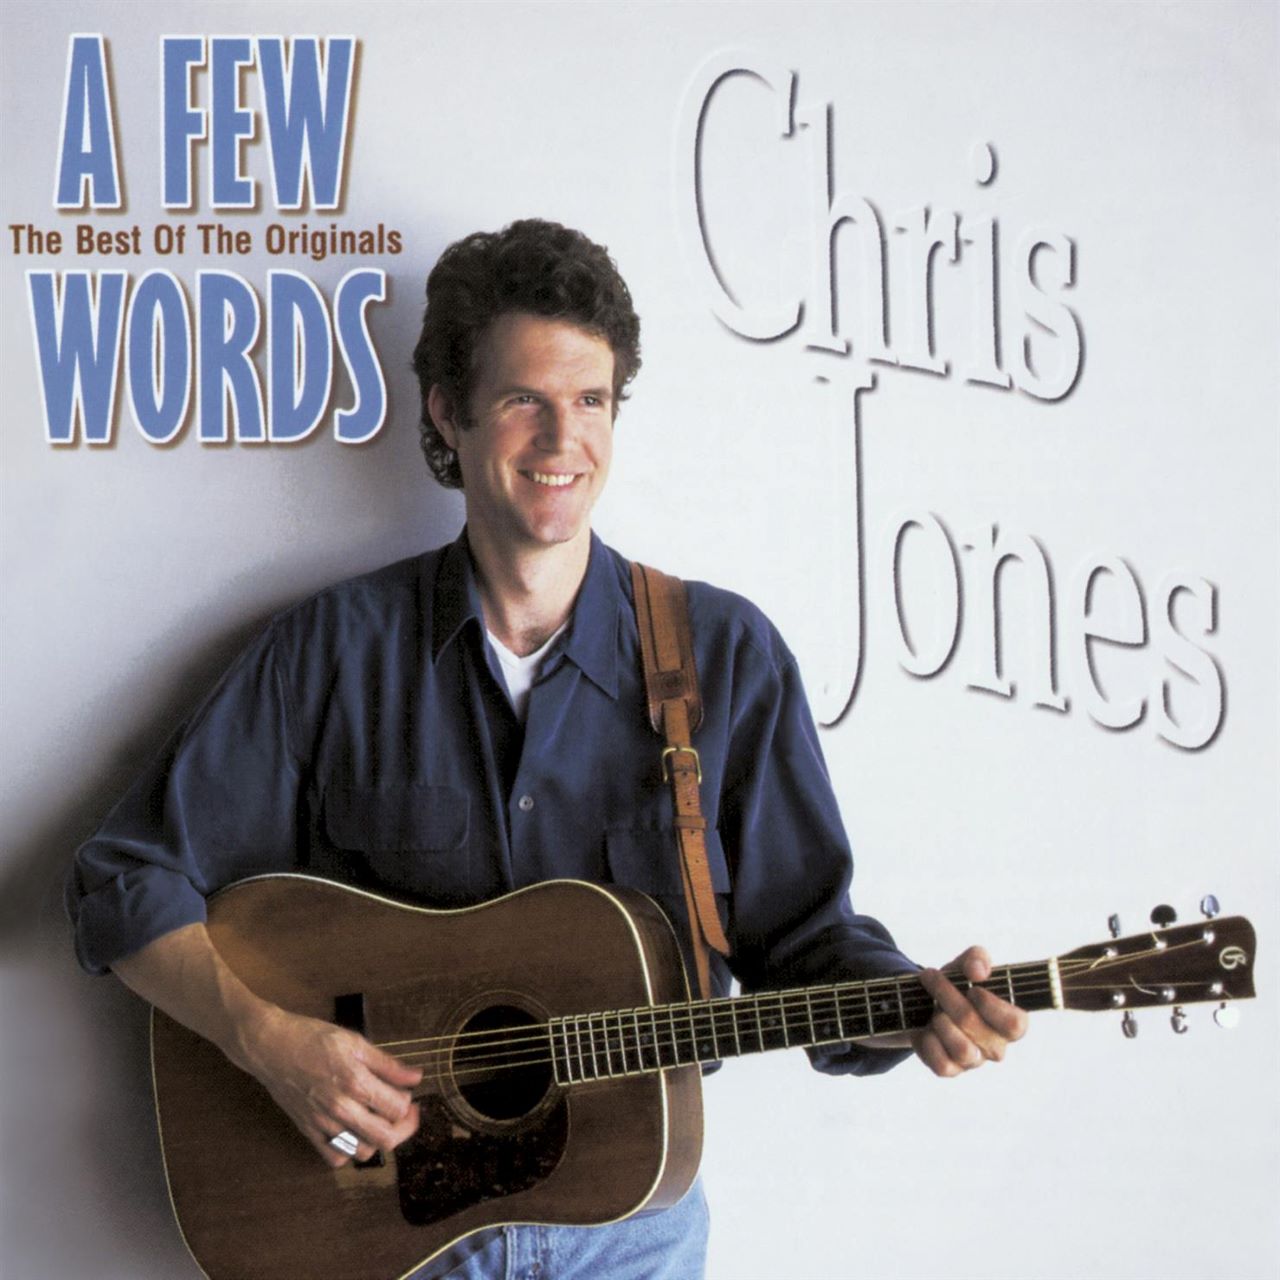 Chris Jones - A Few Words cover allbum